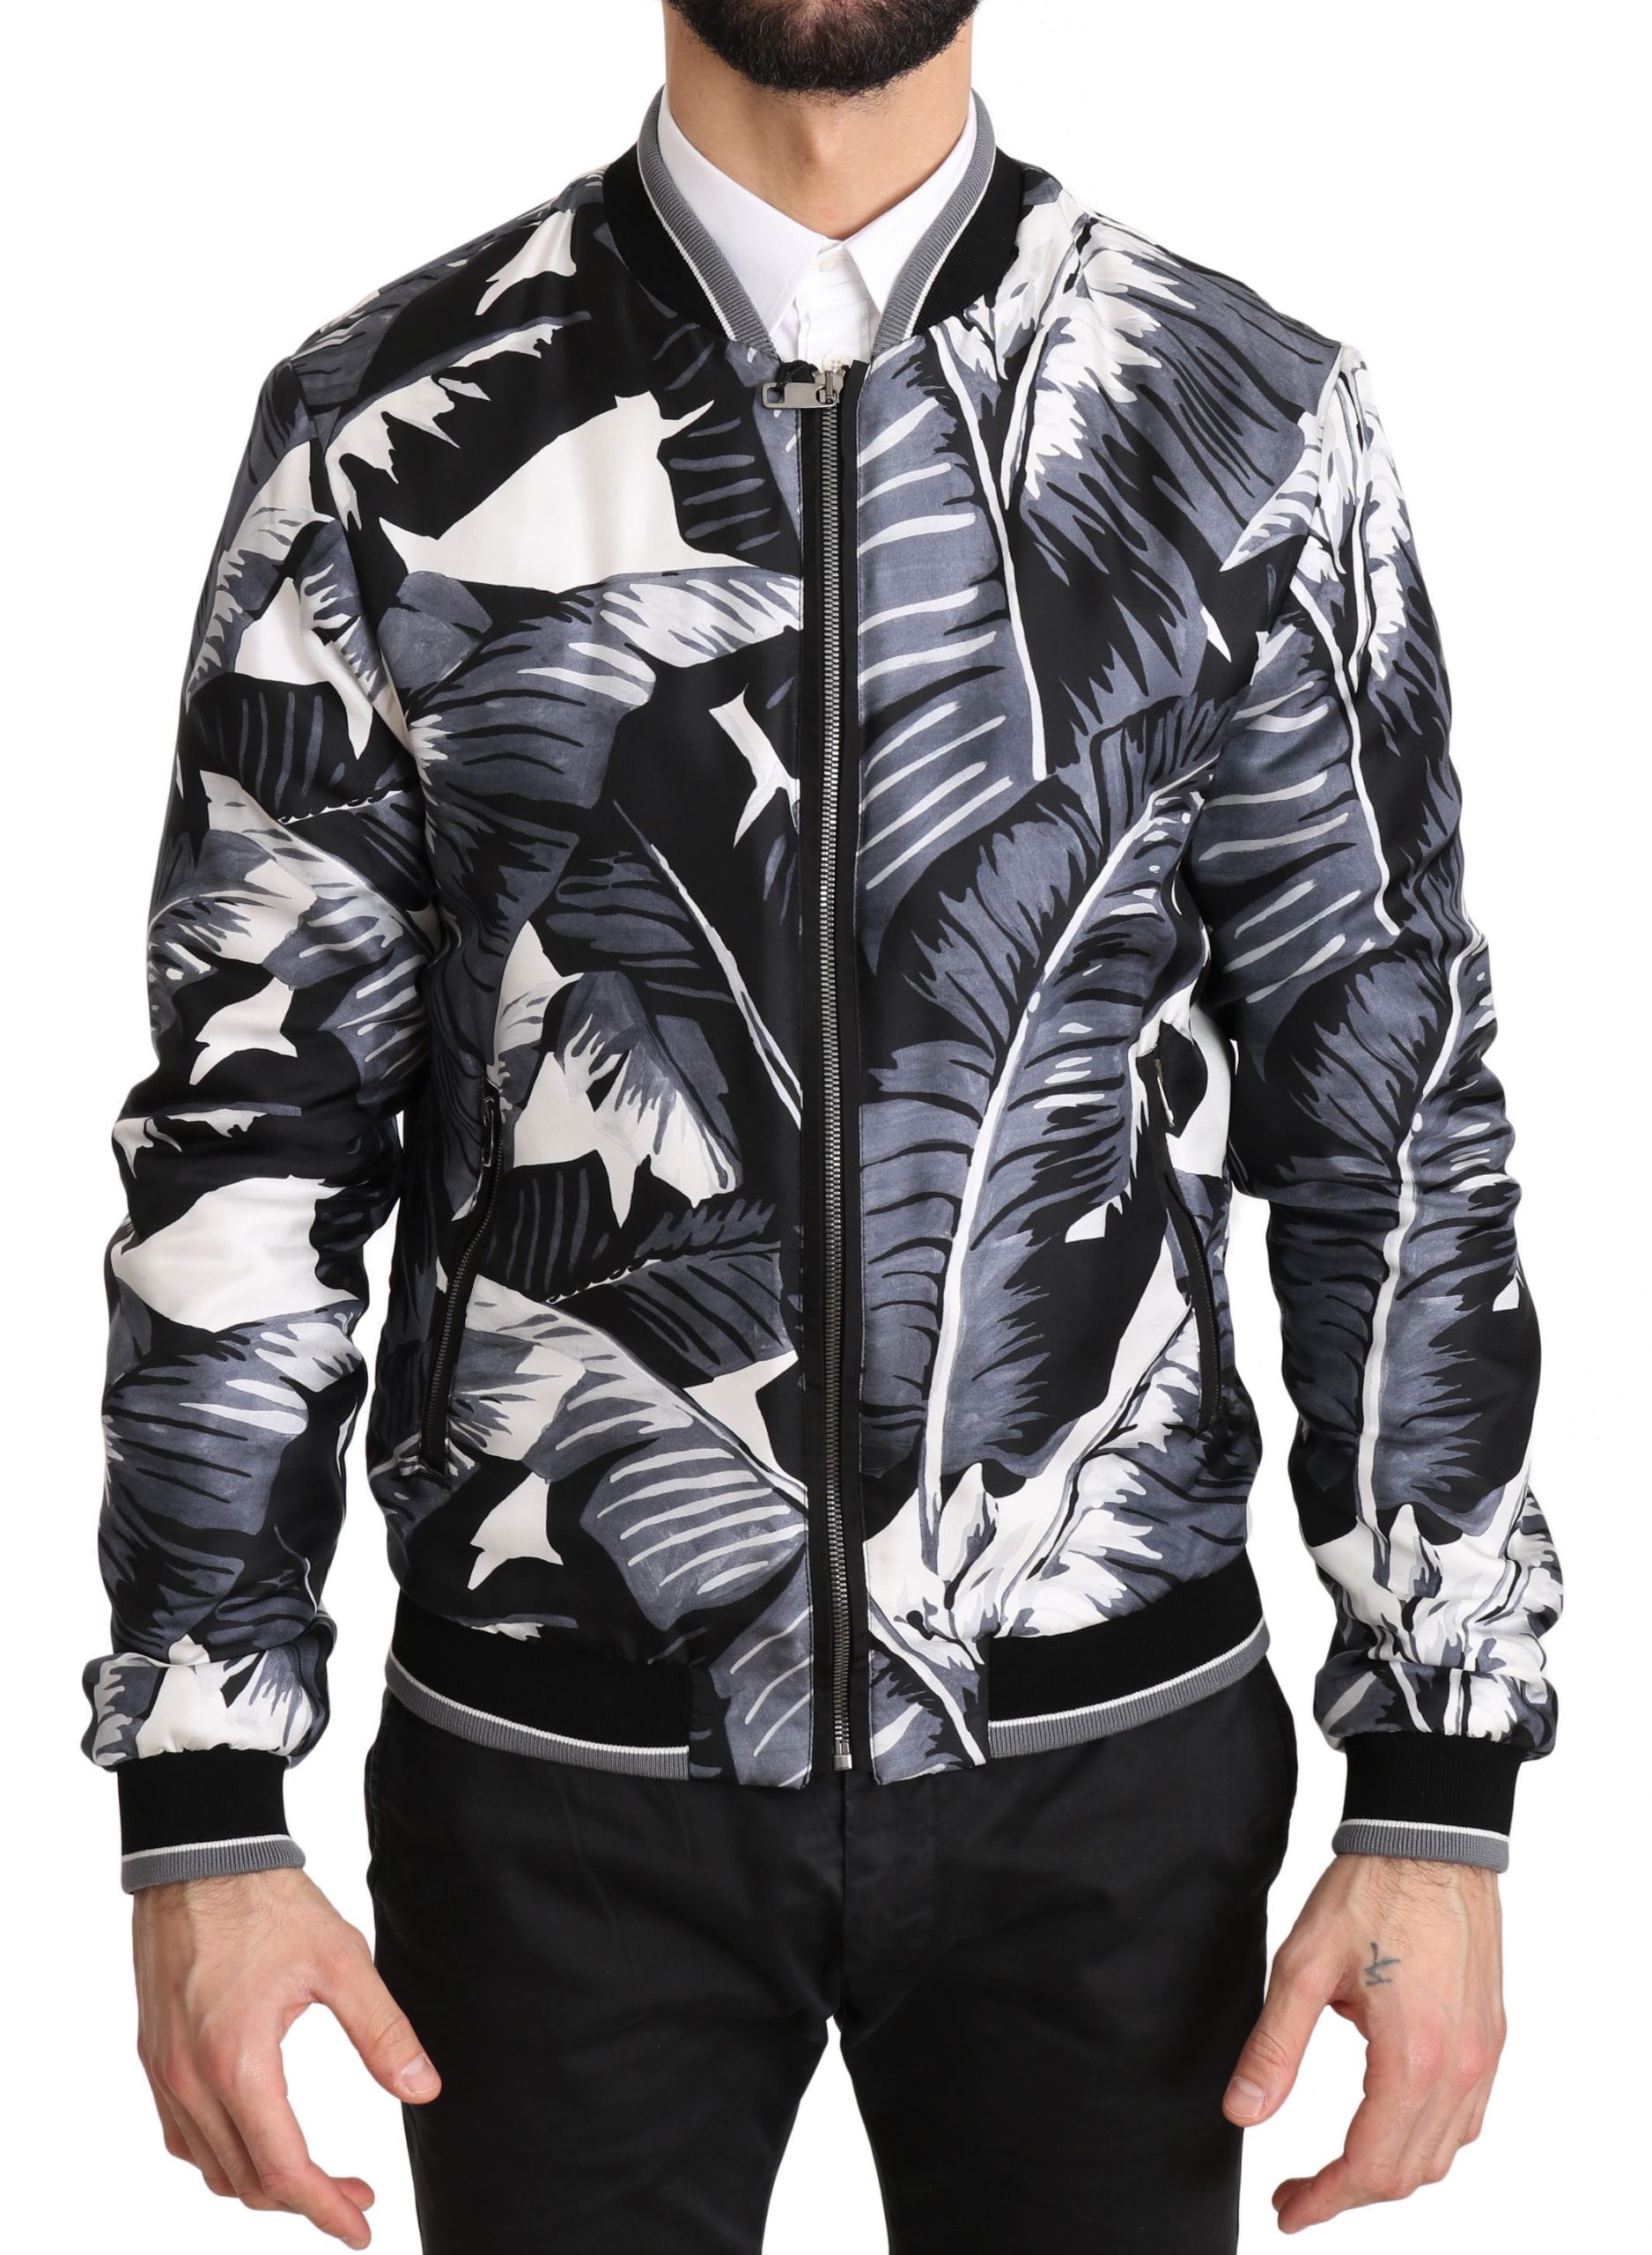 Dolce & Gabbana Men's Silk Banana Leaf Print Bomber Jacket Black JKT2356 - IT44 | XS